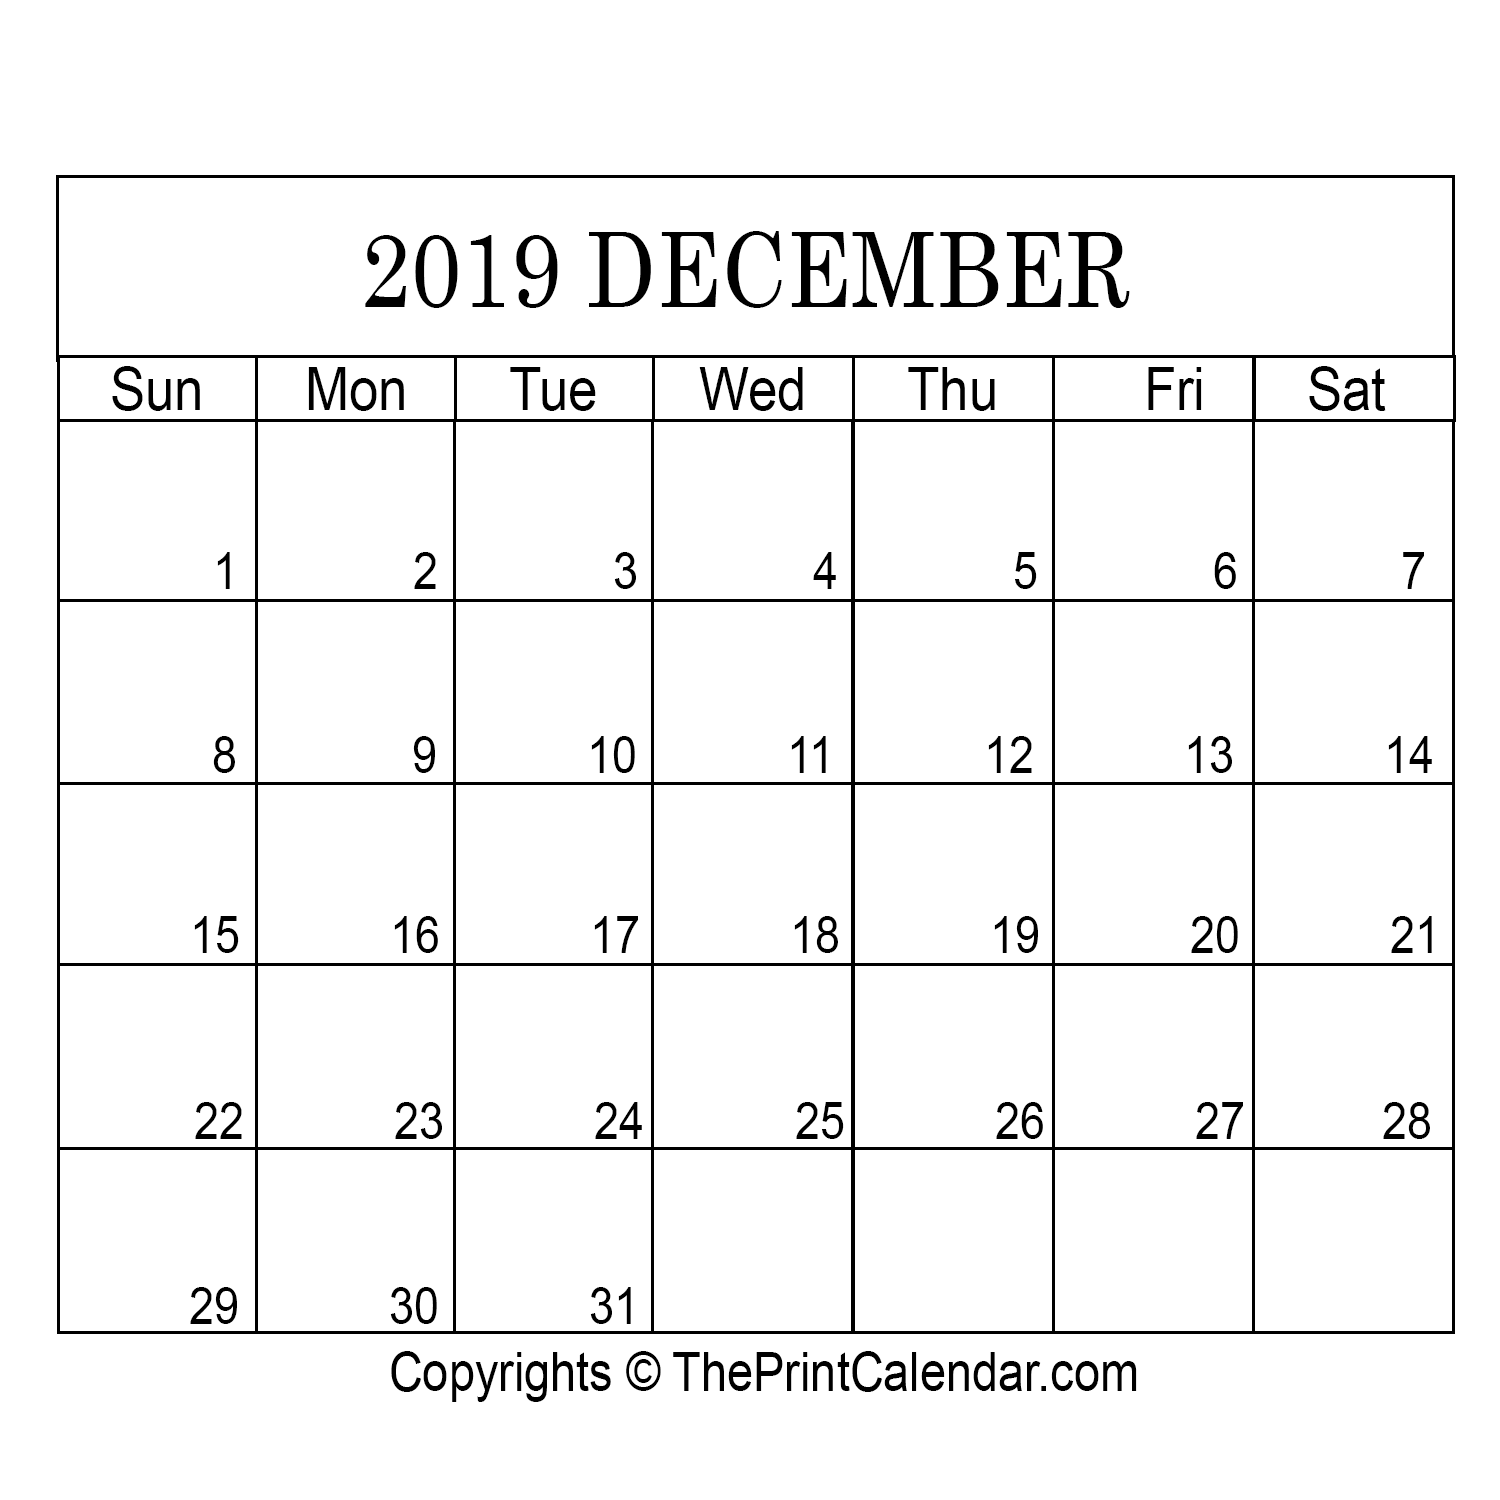 December 2019 Calendar 917